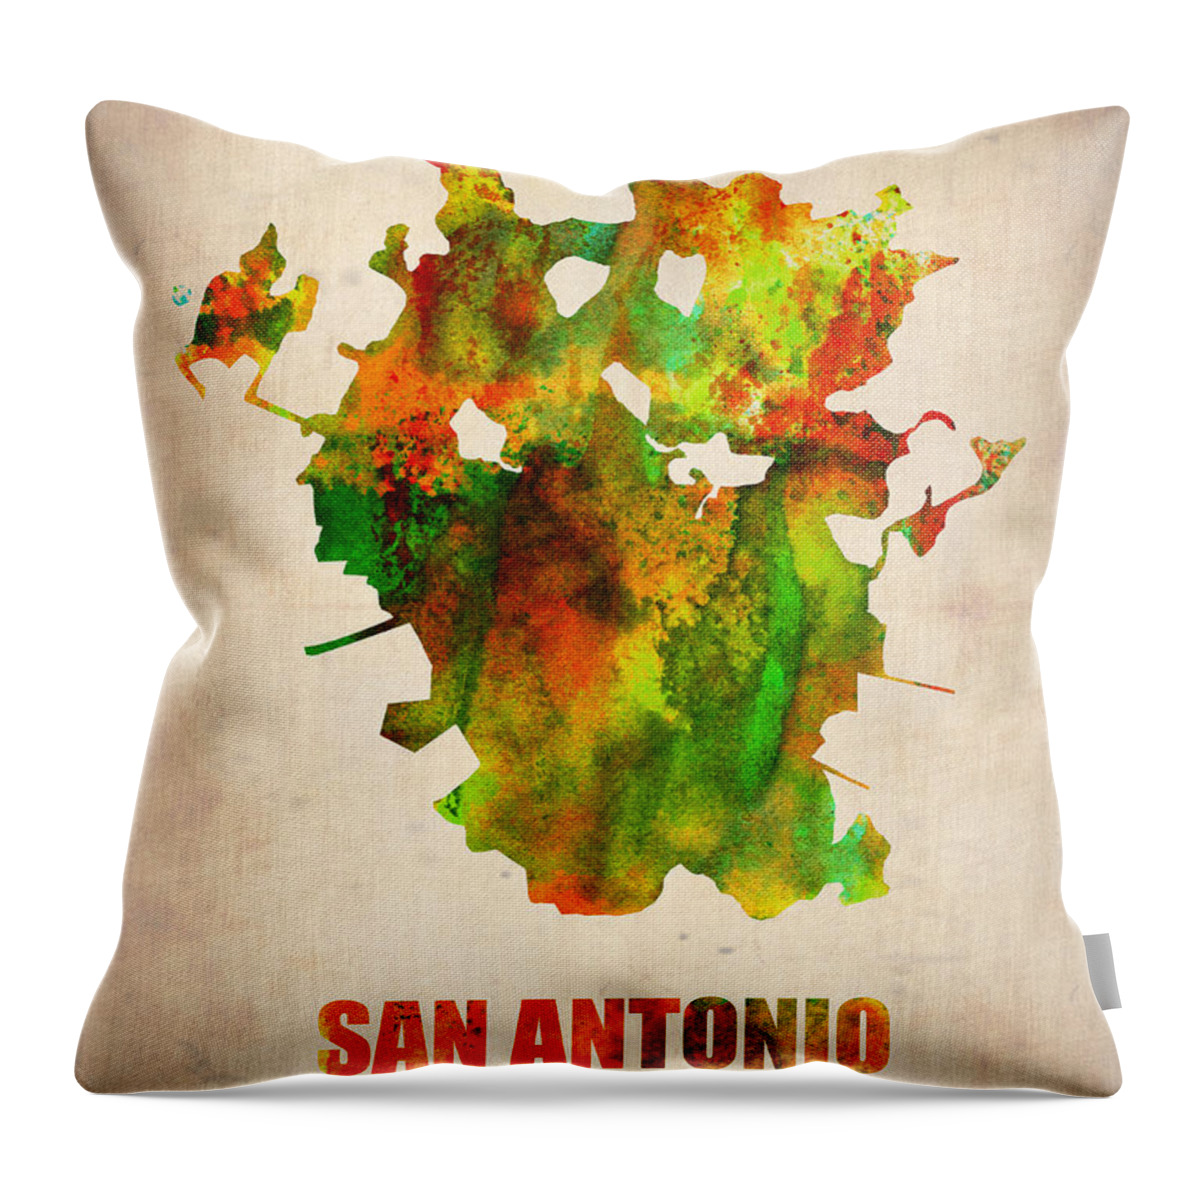 San Antonio Throw Pillow featuring the painting San Antonio Watercolor Map by Naxart Studio